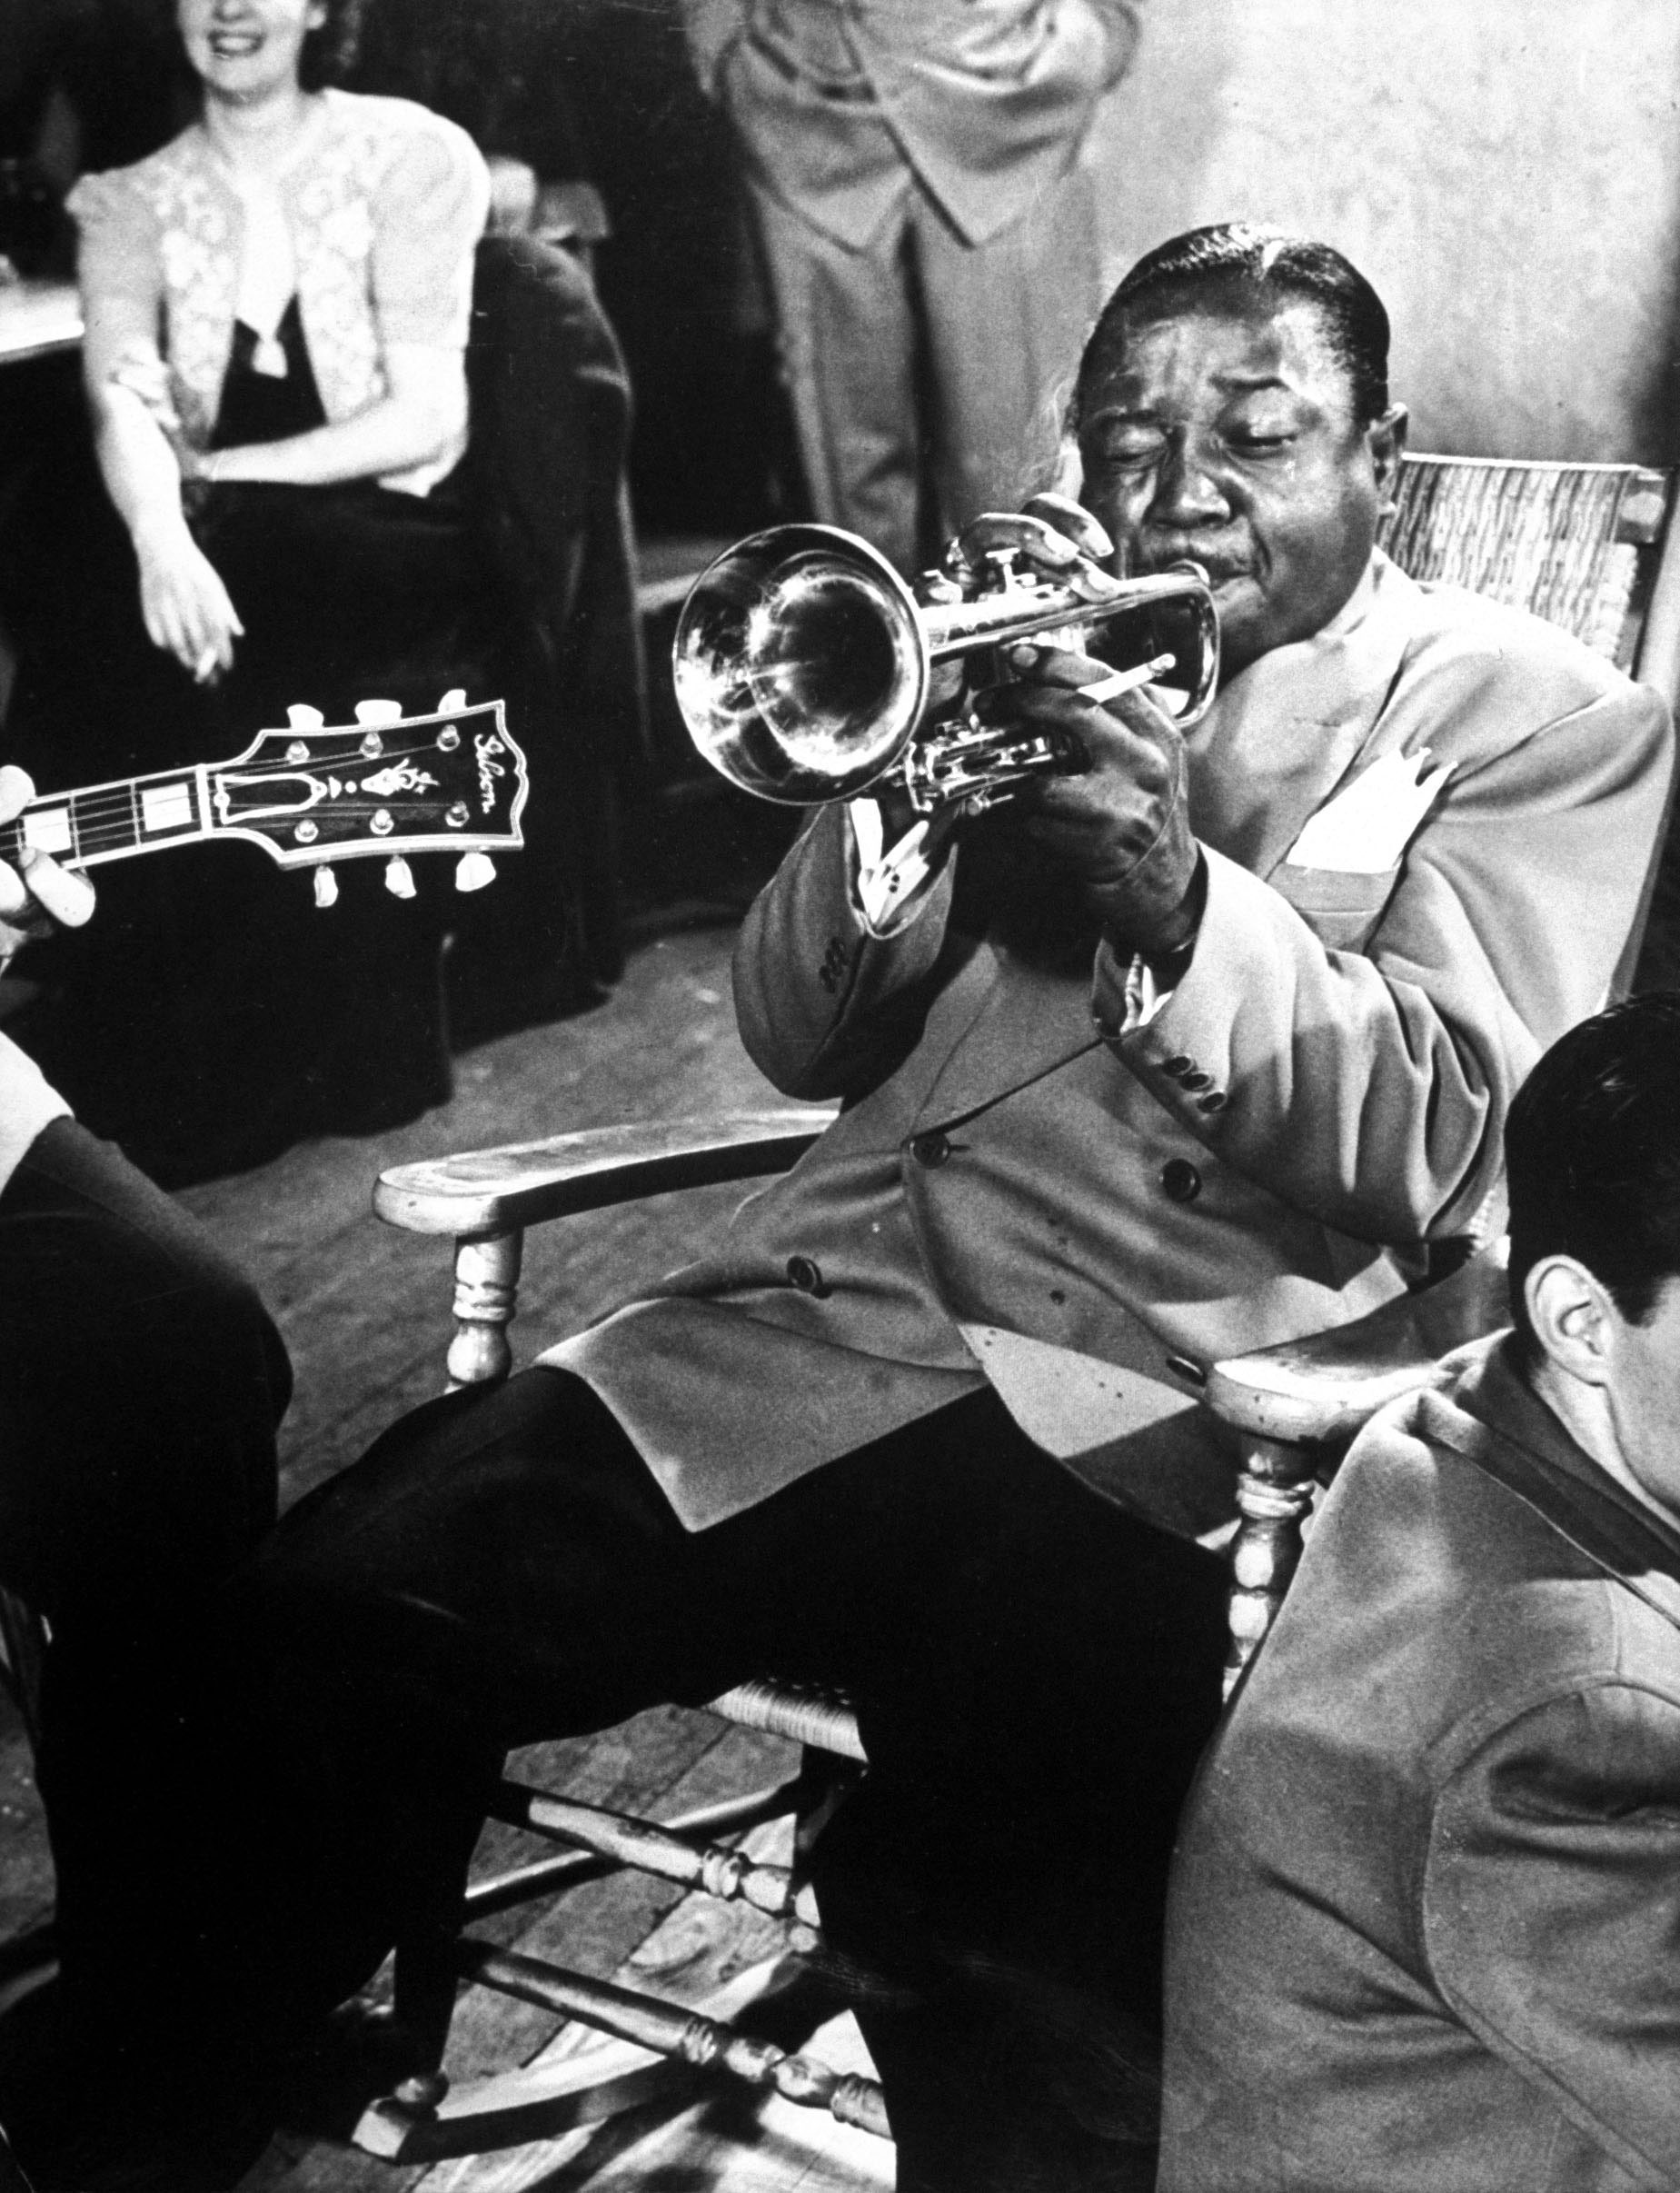 The one and only Roy Eldridge plays trumpet during drummer Gene Krupa's jam session at Gjon Mili's studio, 1940s.